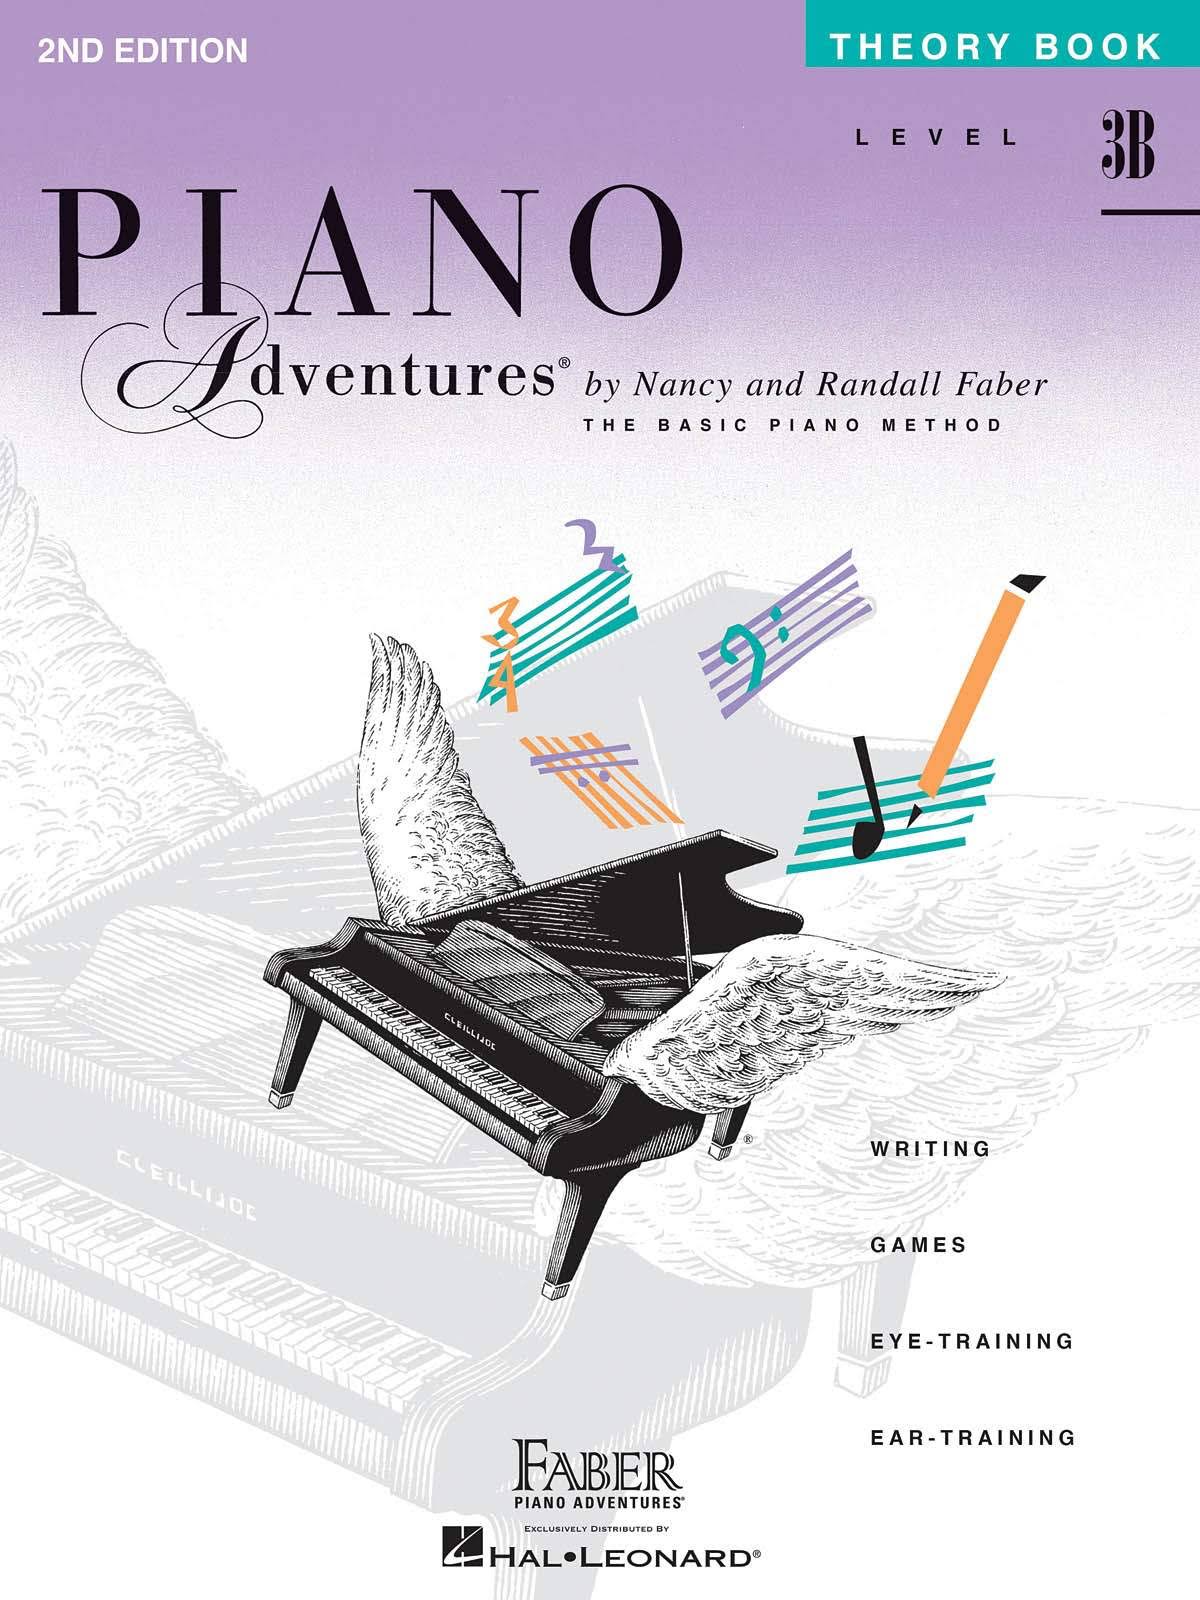 Piano Adventures Theory Book Music Sheet - Level 3B